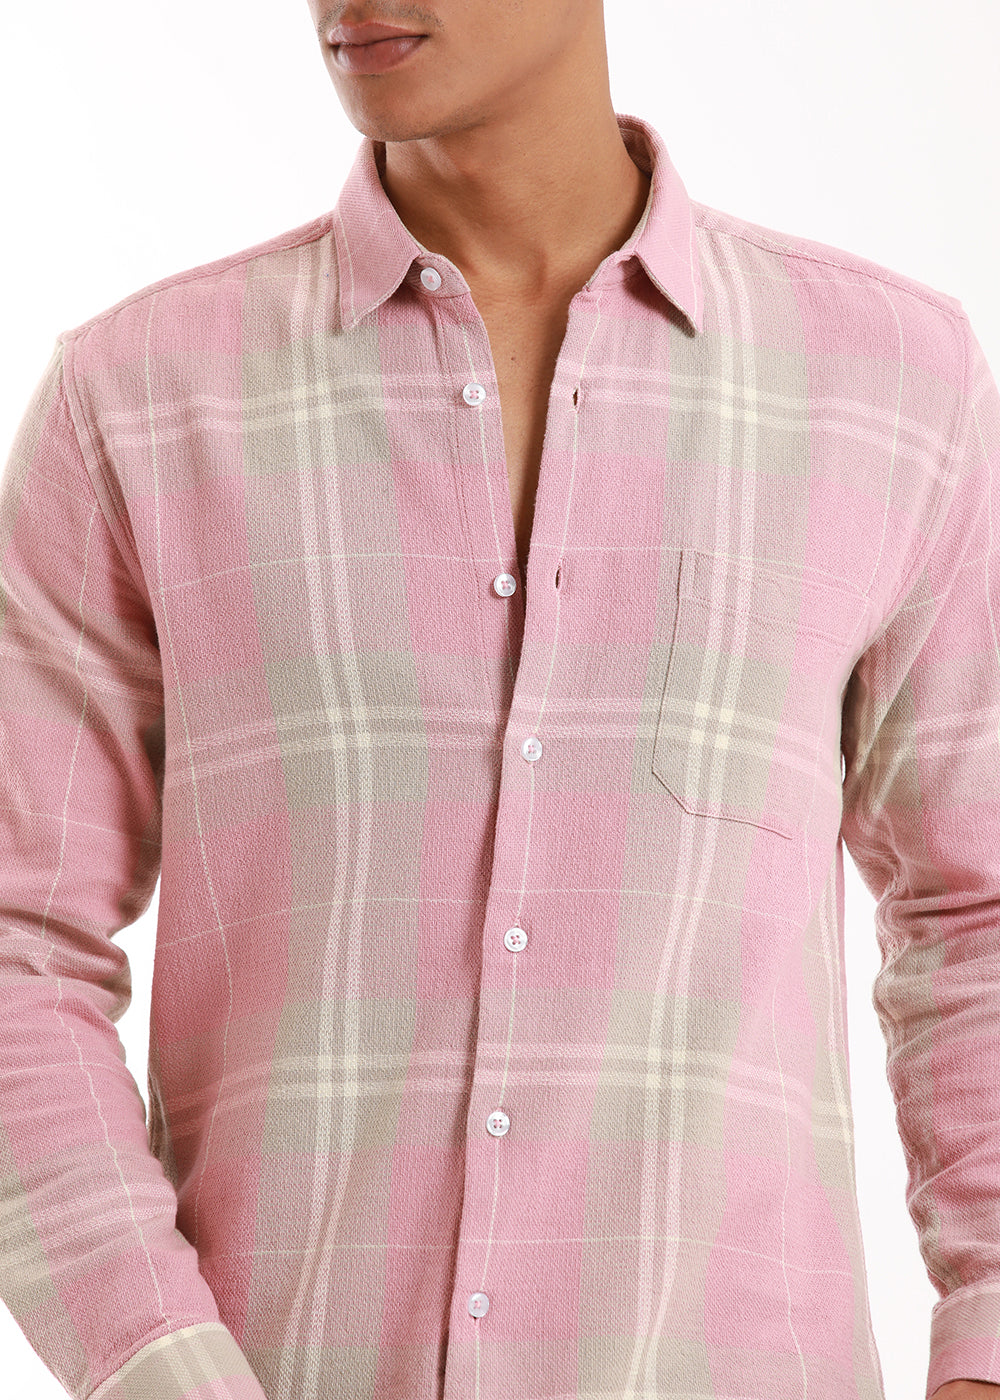 Dobby French Pink Check Shirt